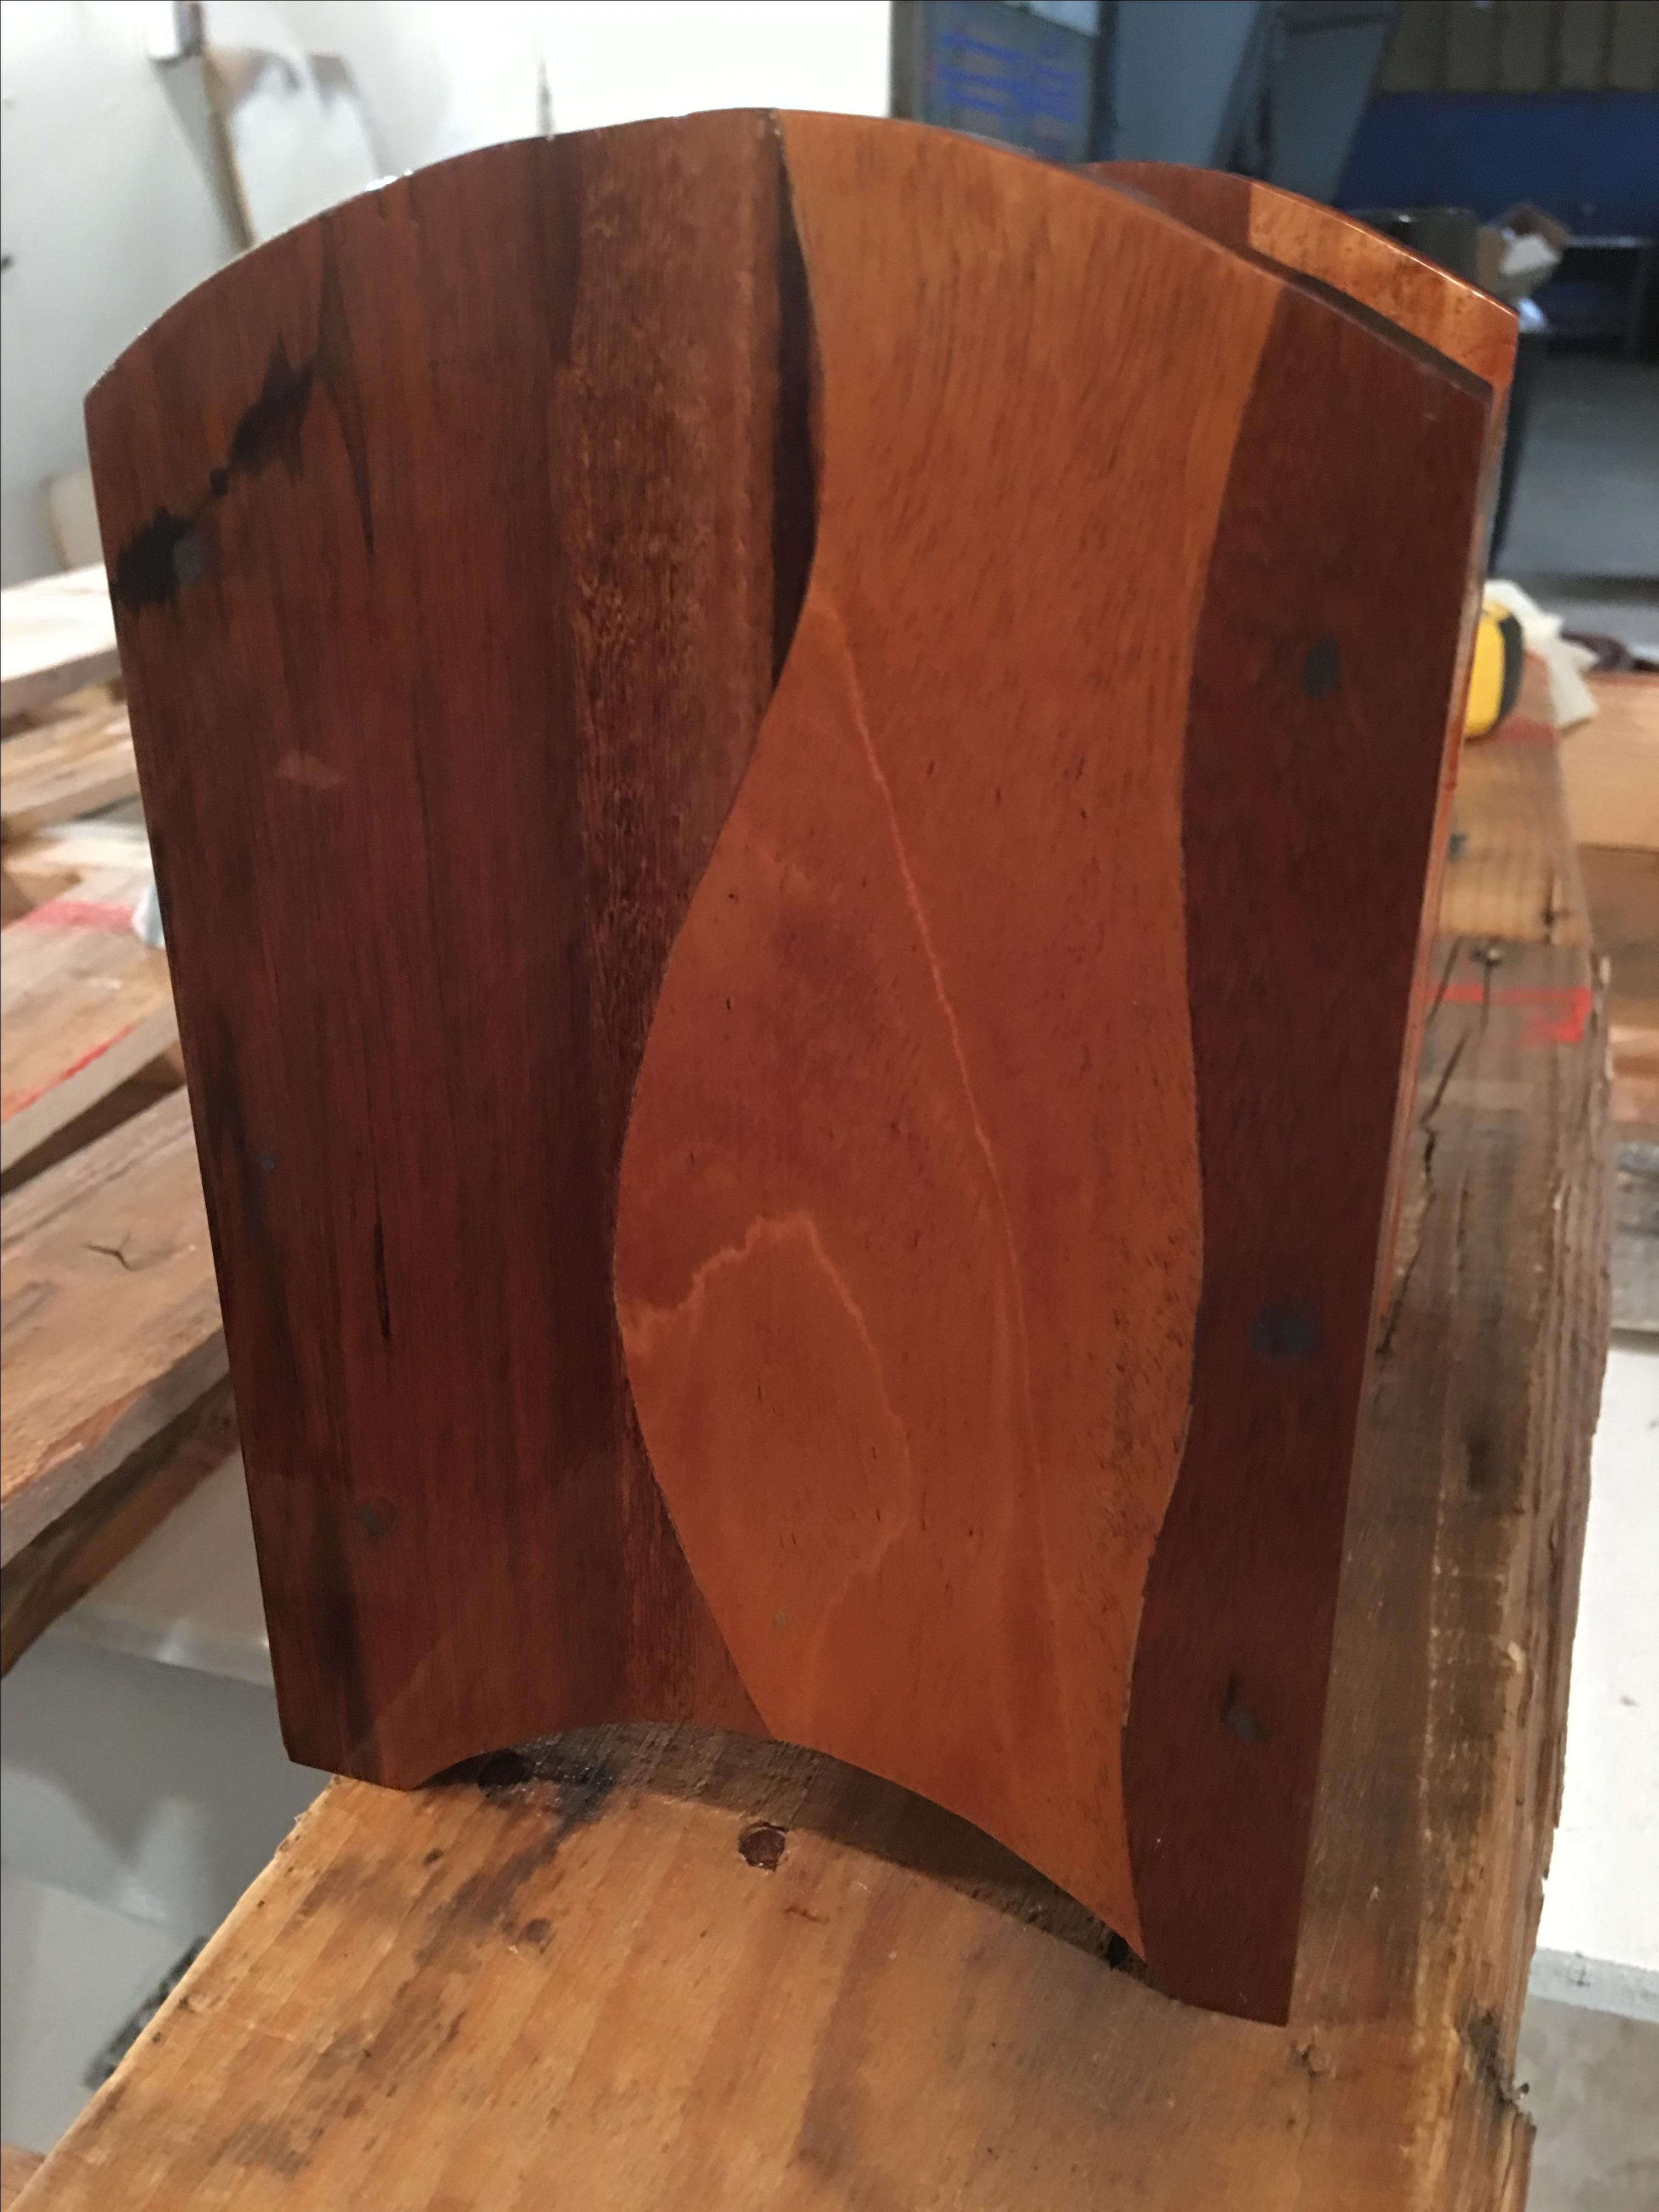 Buy a Handmade Custom Wooden Napkin Holder, made to order from